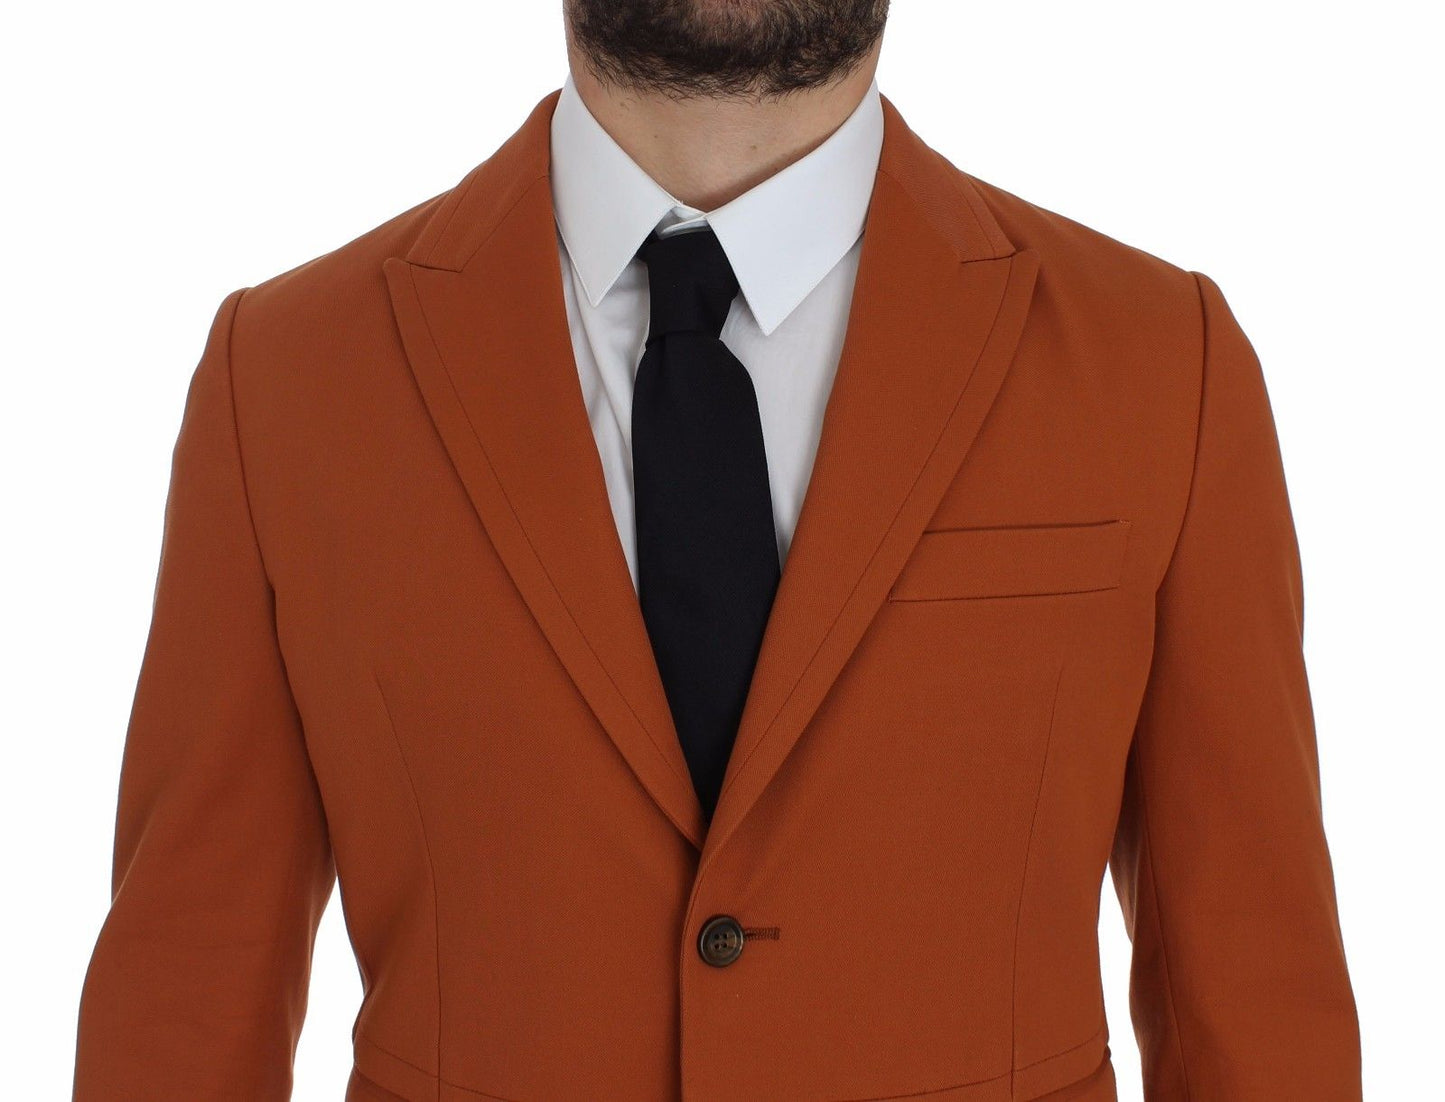 Elegant Orange Casual Cotton Blend Blazer